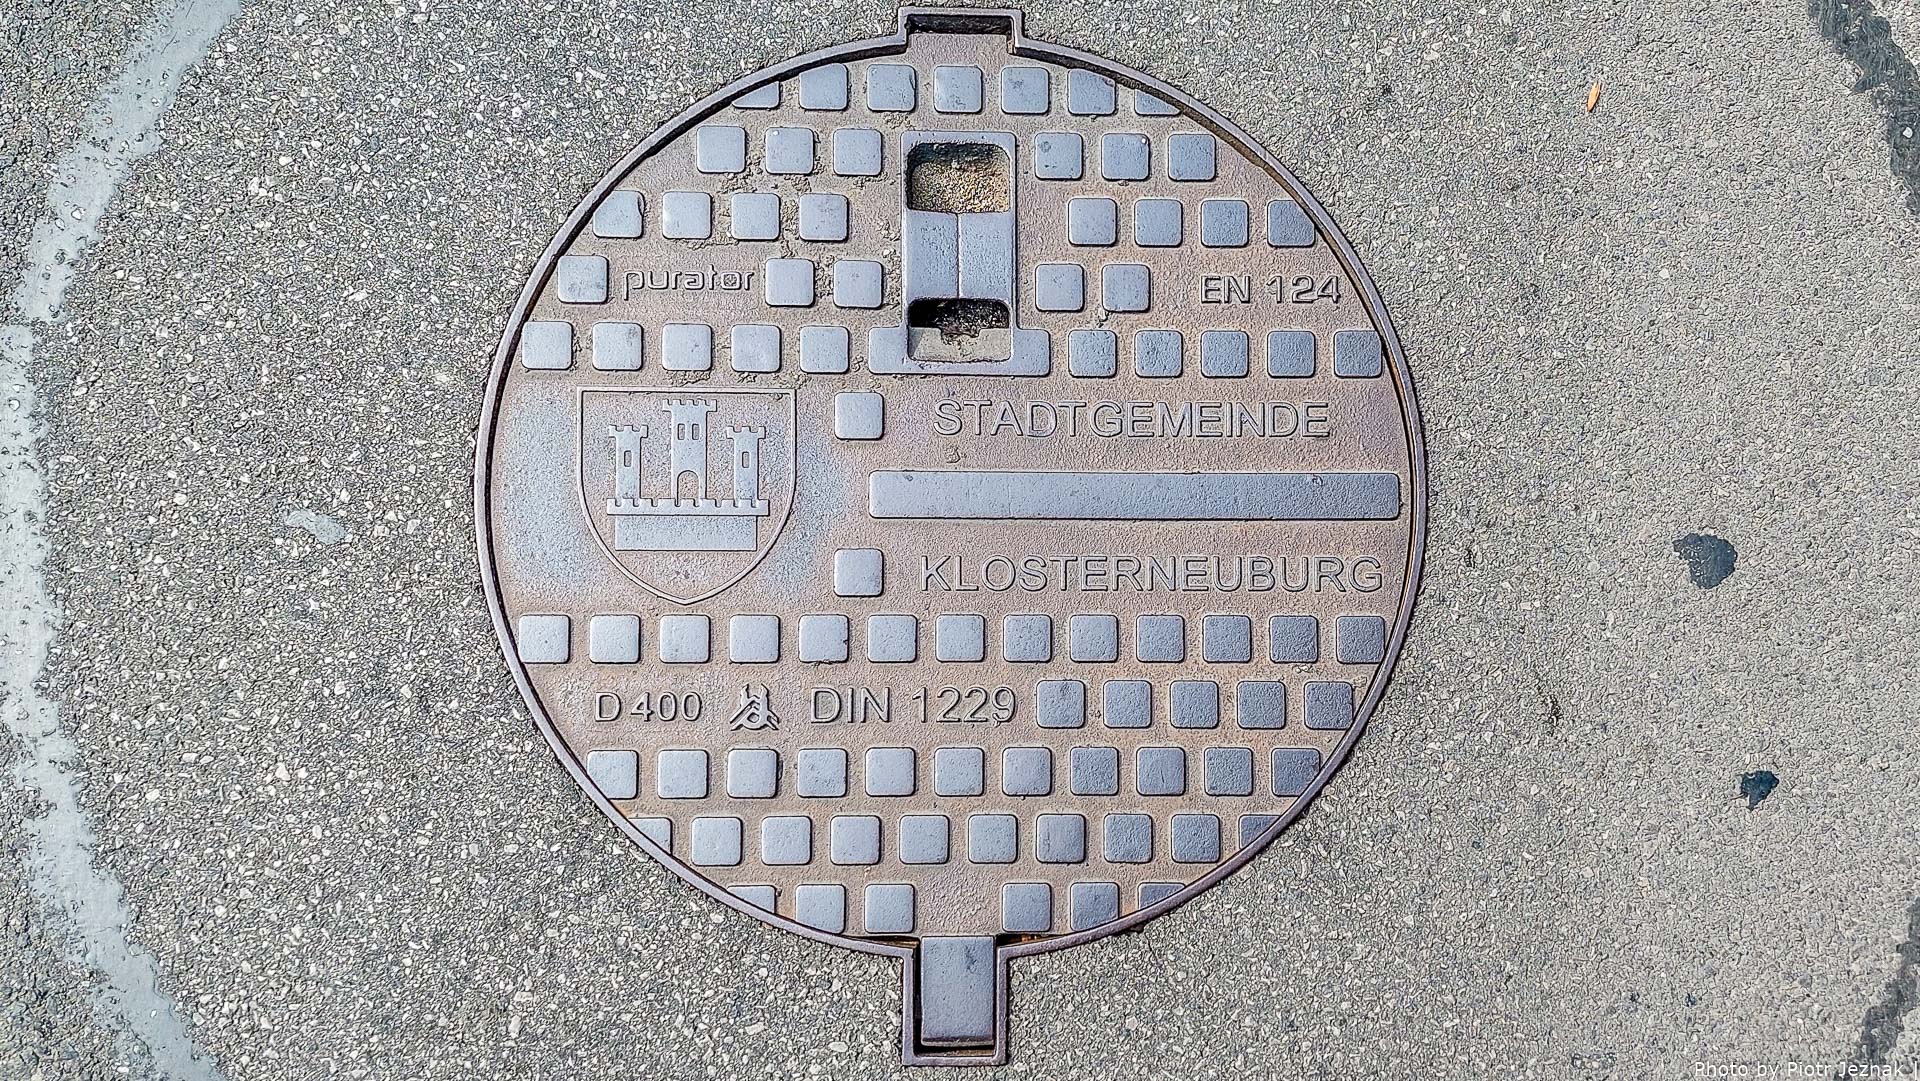 Manhole cover in Klosterneuburg